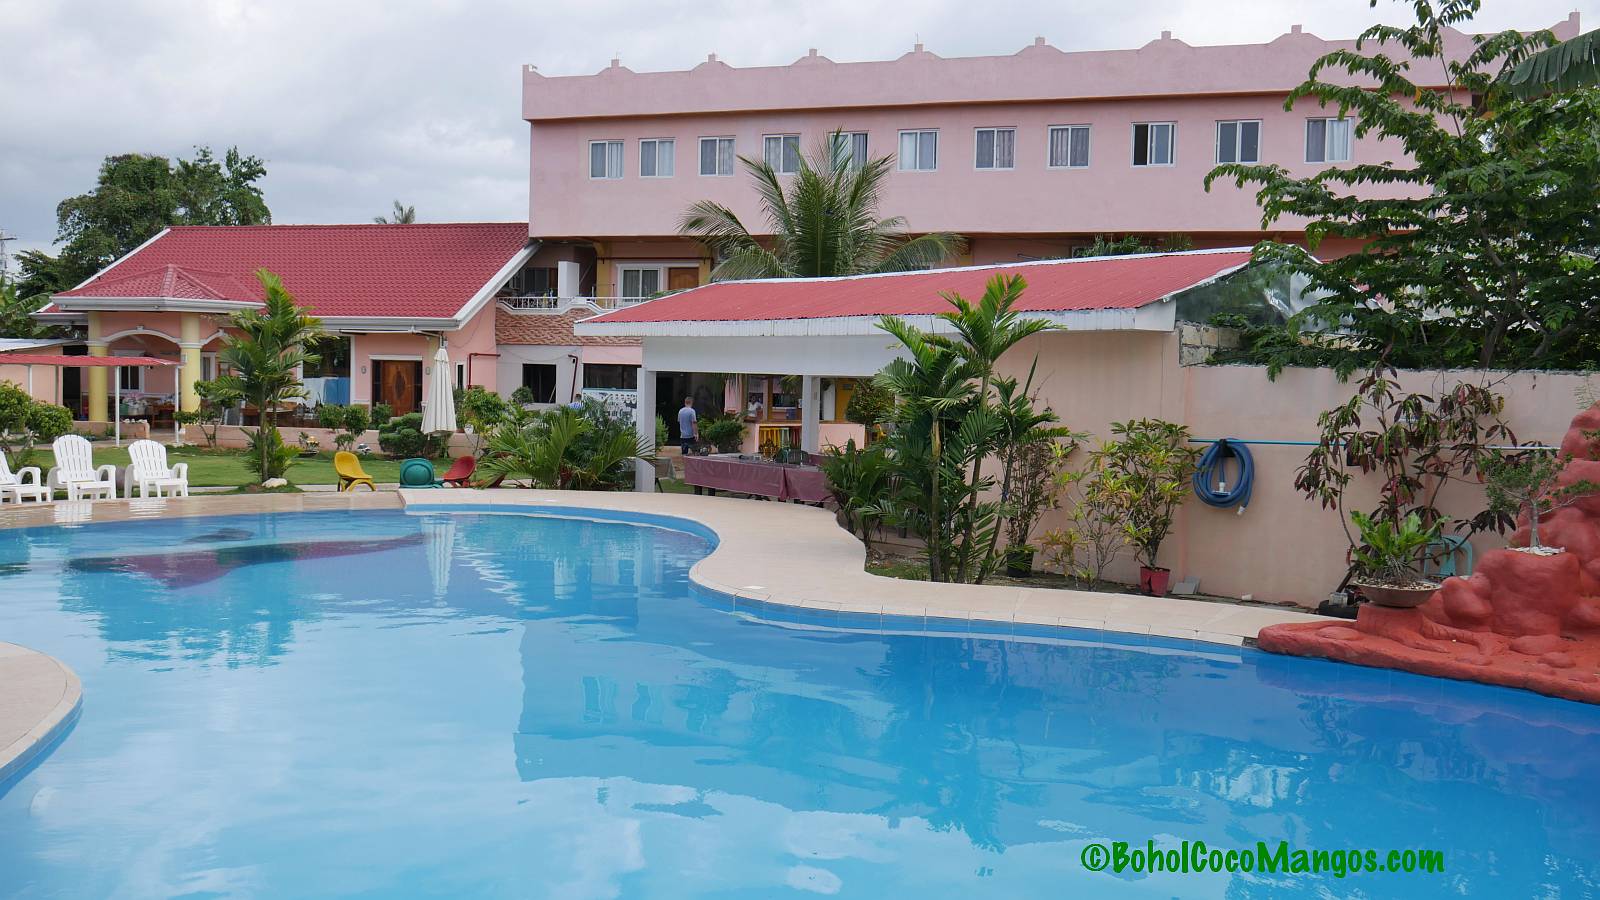 Coco Mangos Place Resort Panglao Bohol015